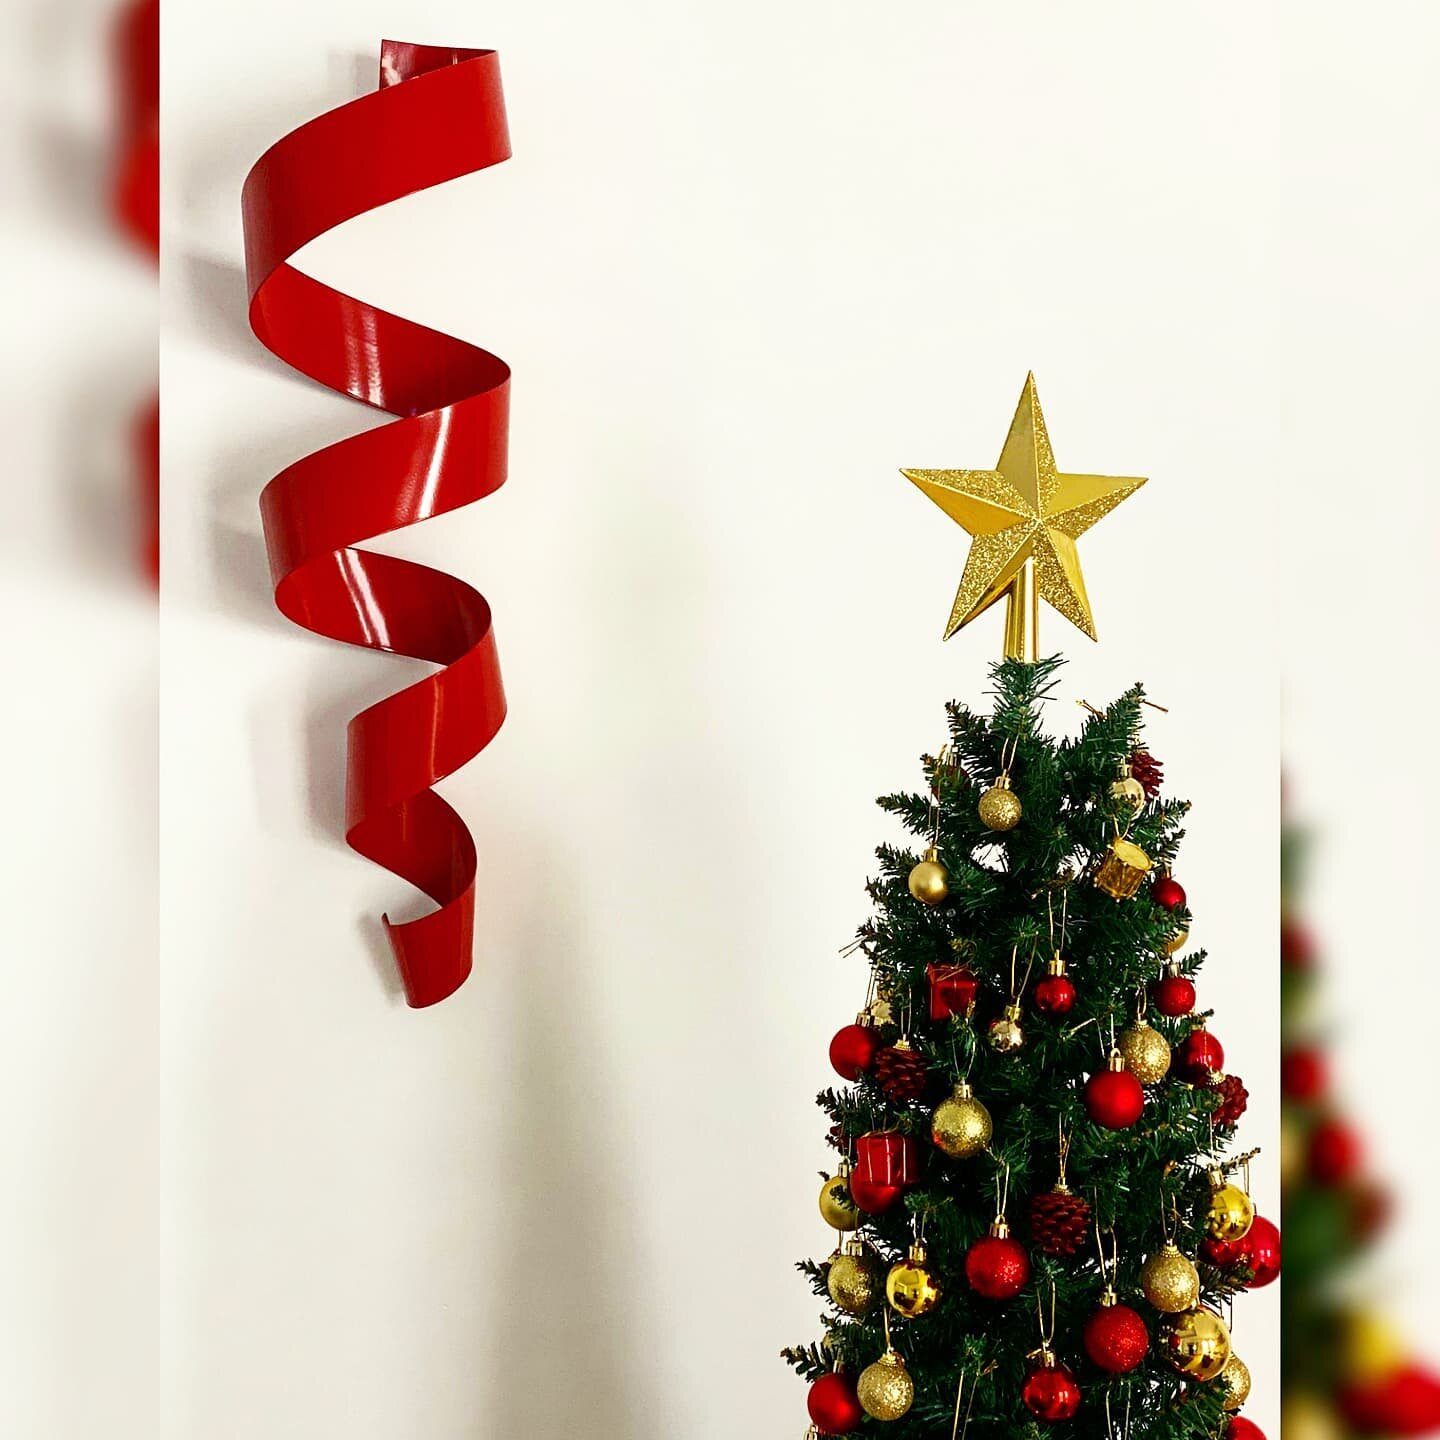 Merrill Christmas everybody, enjoy your weekend!
&iexcl;Feliz Navidad!

-------
#Navidadconarte #artemurcia #artesania #sculpture #artecontemporaneo #decoracion #interiordesign #homedesign